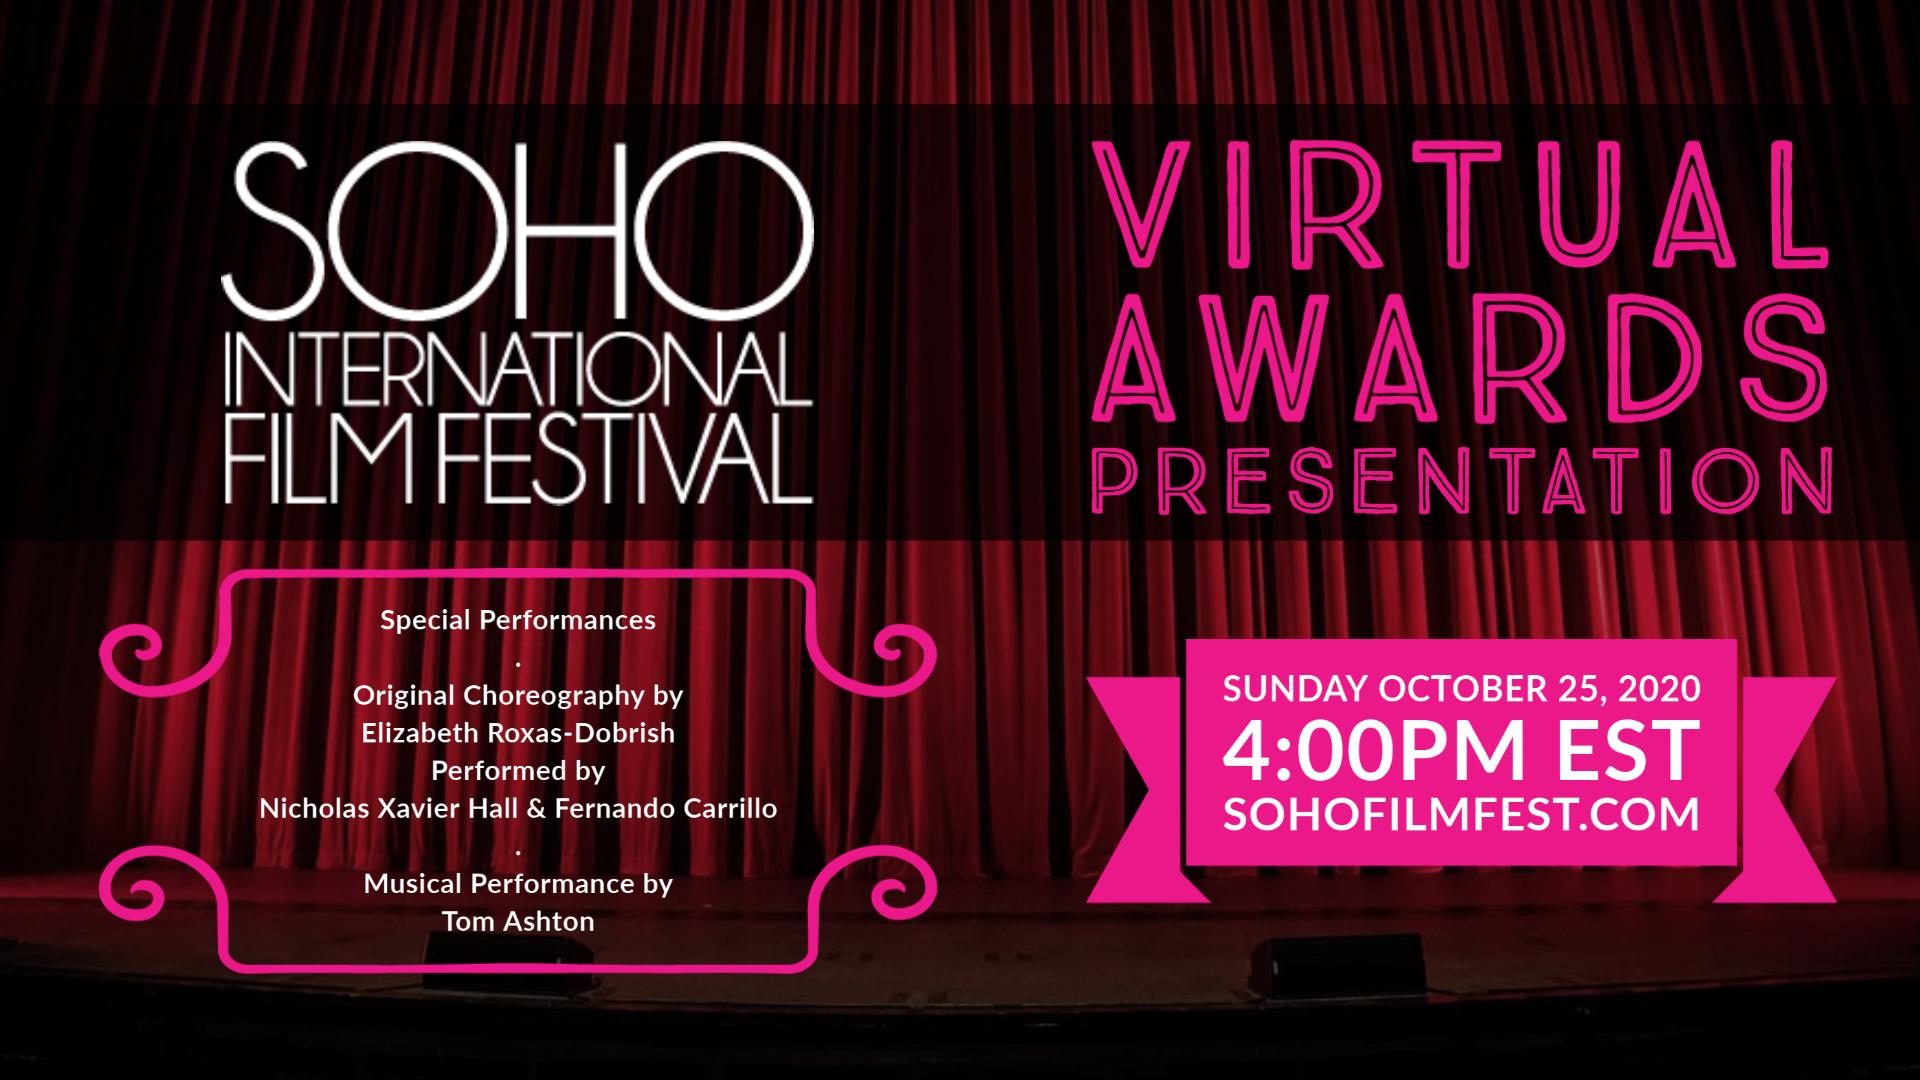 2020 SOHO International Film Festival Virtual Awards Presentation